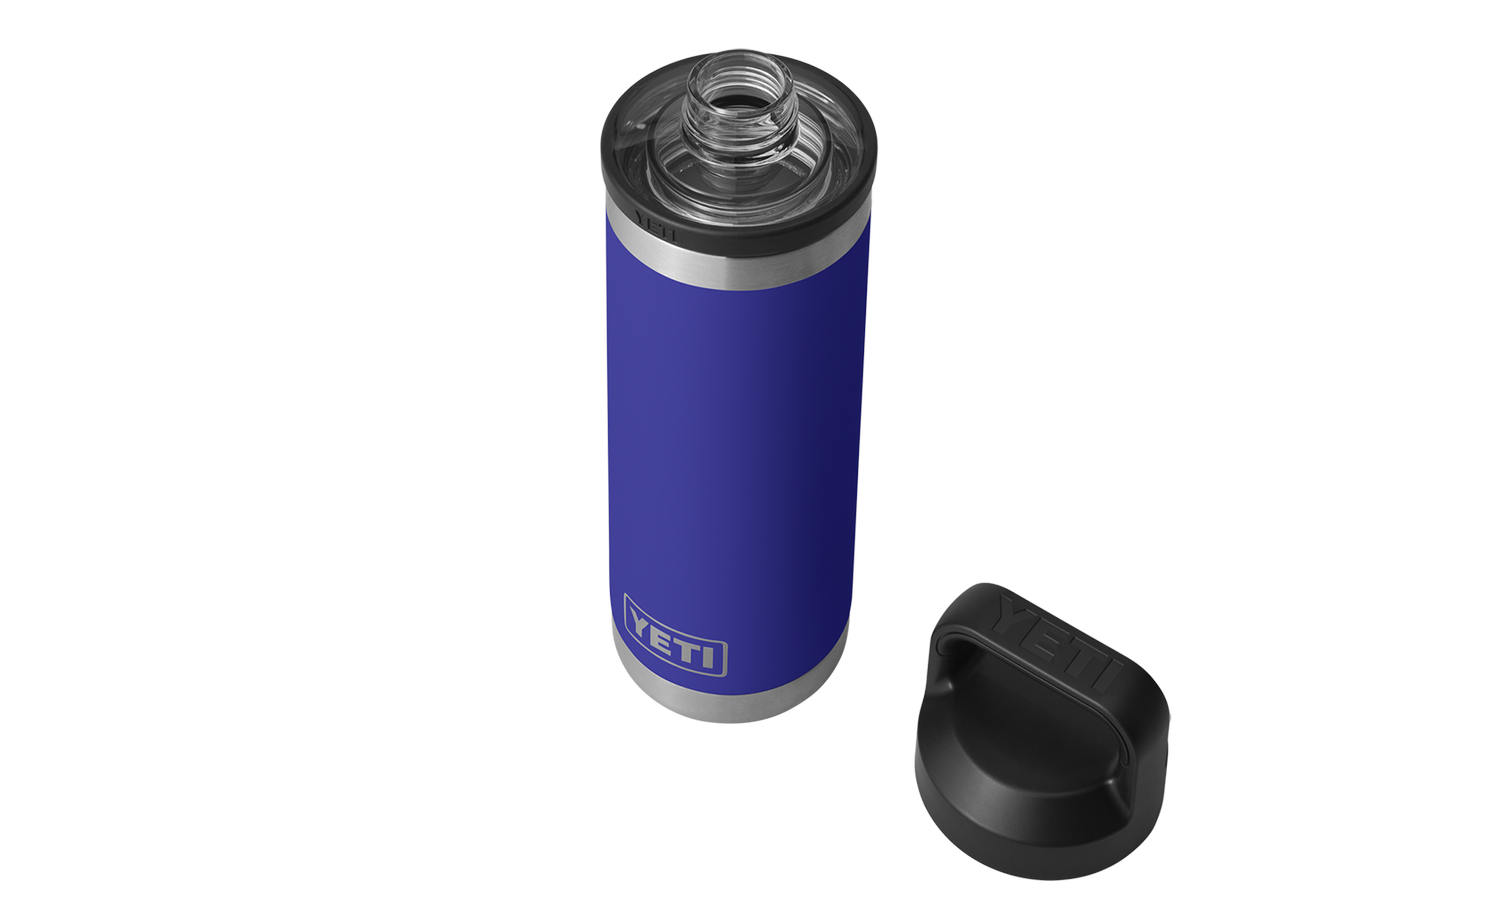 YETI Rambler Bottle - 18 oz. - Chug Cap - Aquifer Blue - TackleDirect